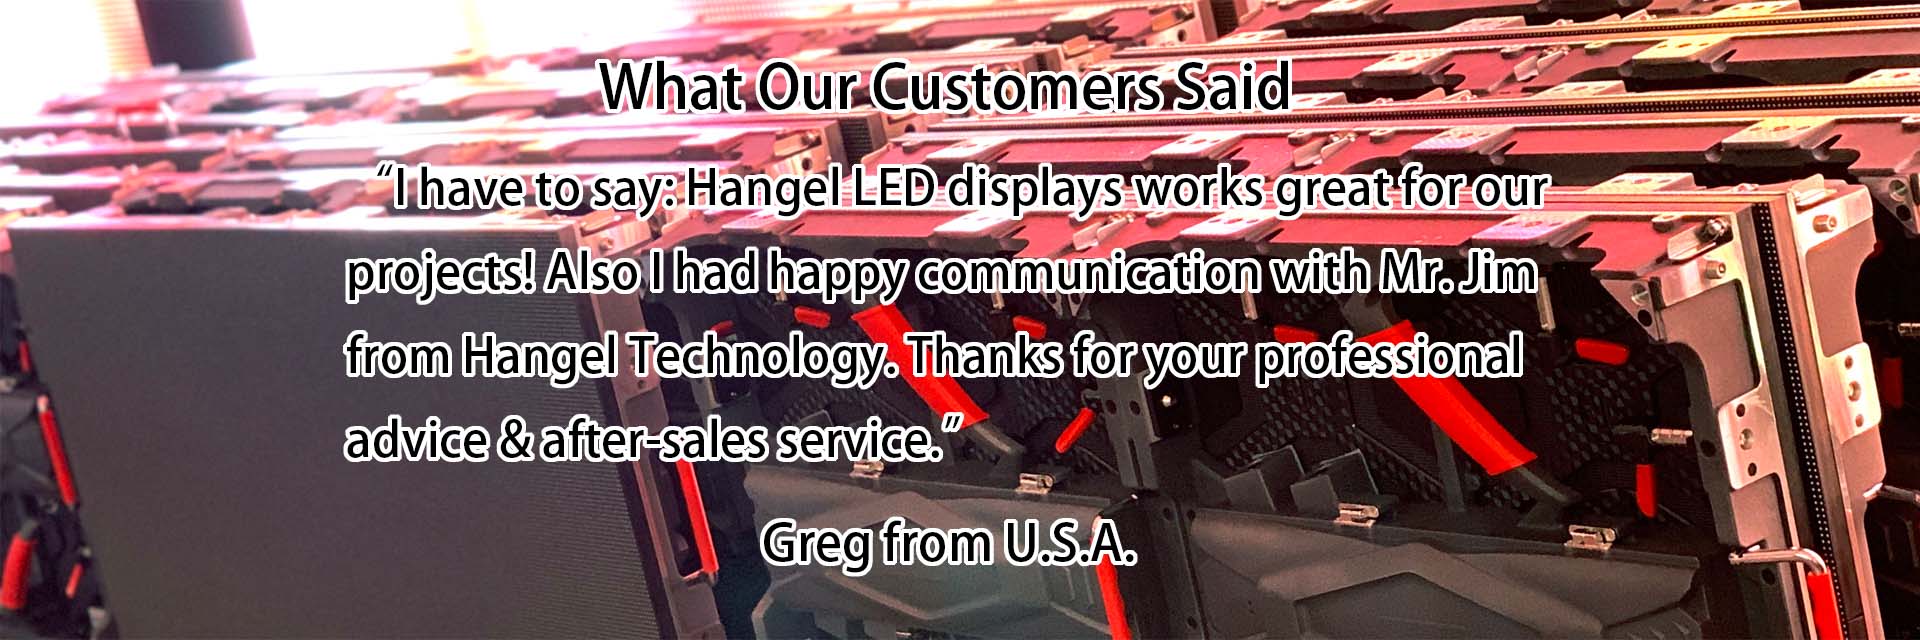 Hangel LED display customer comment